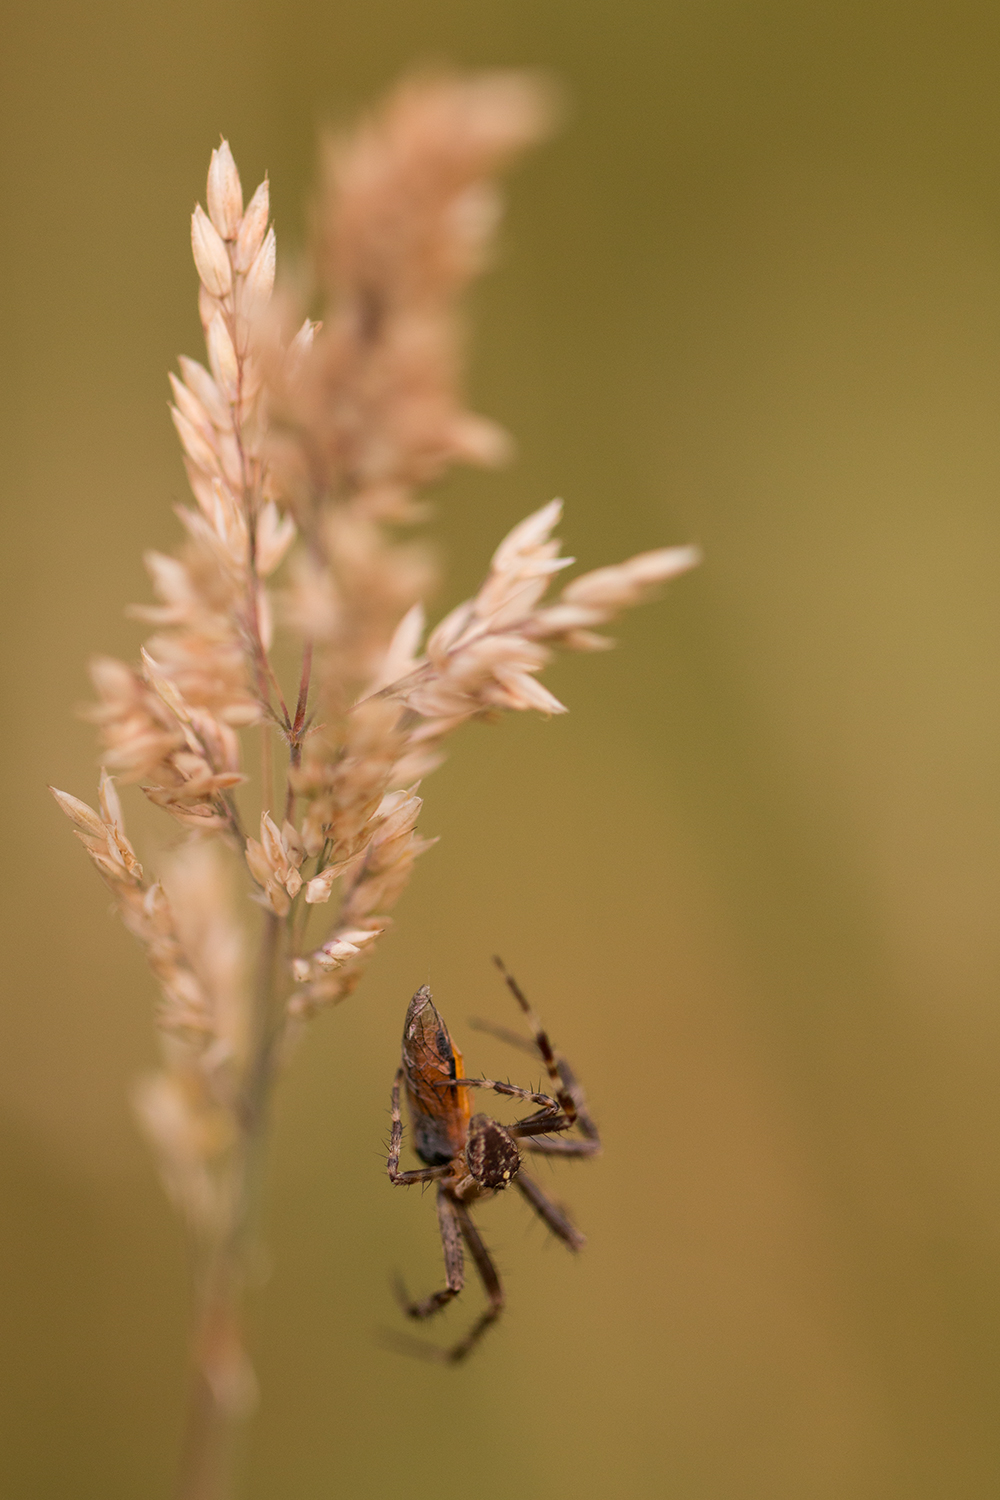 Kruisspin (Araneus diadematus)